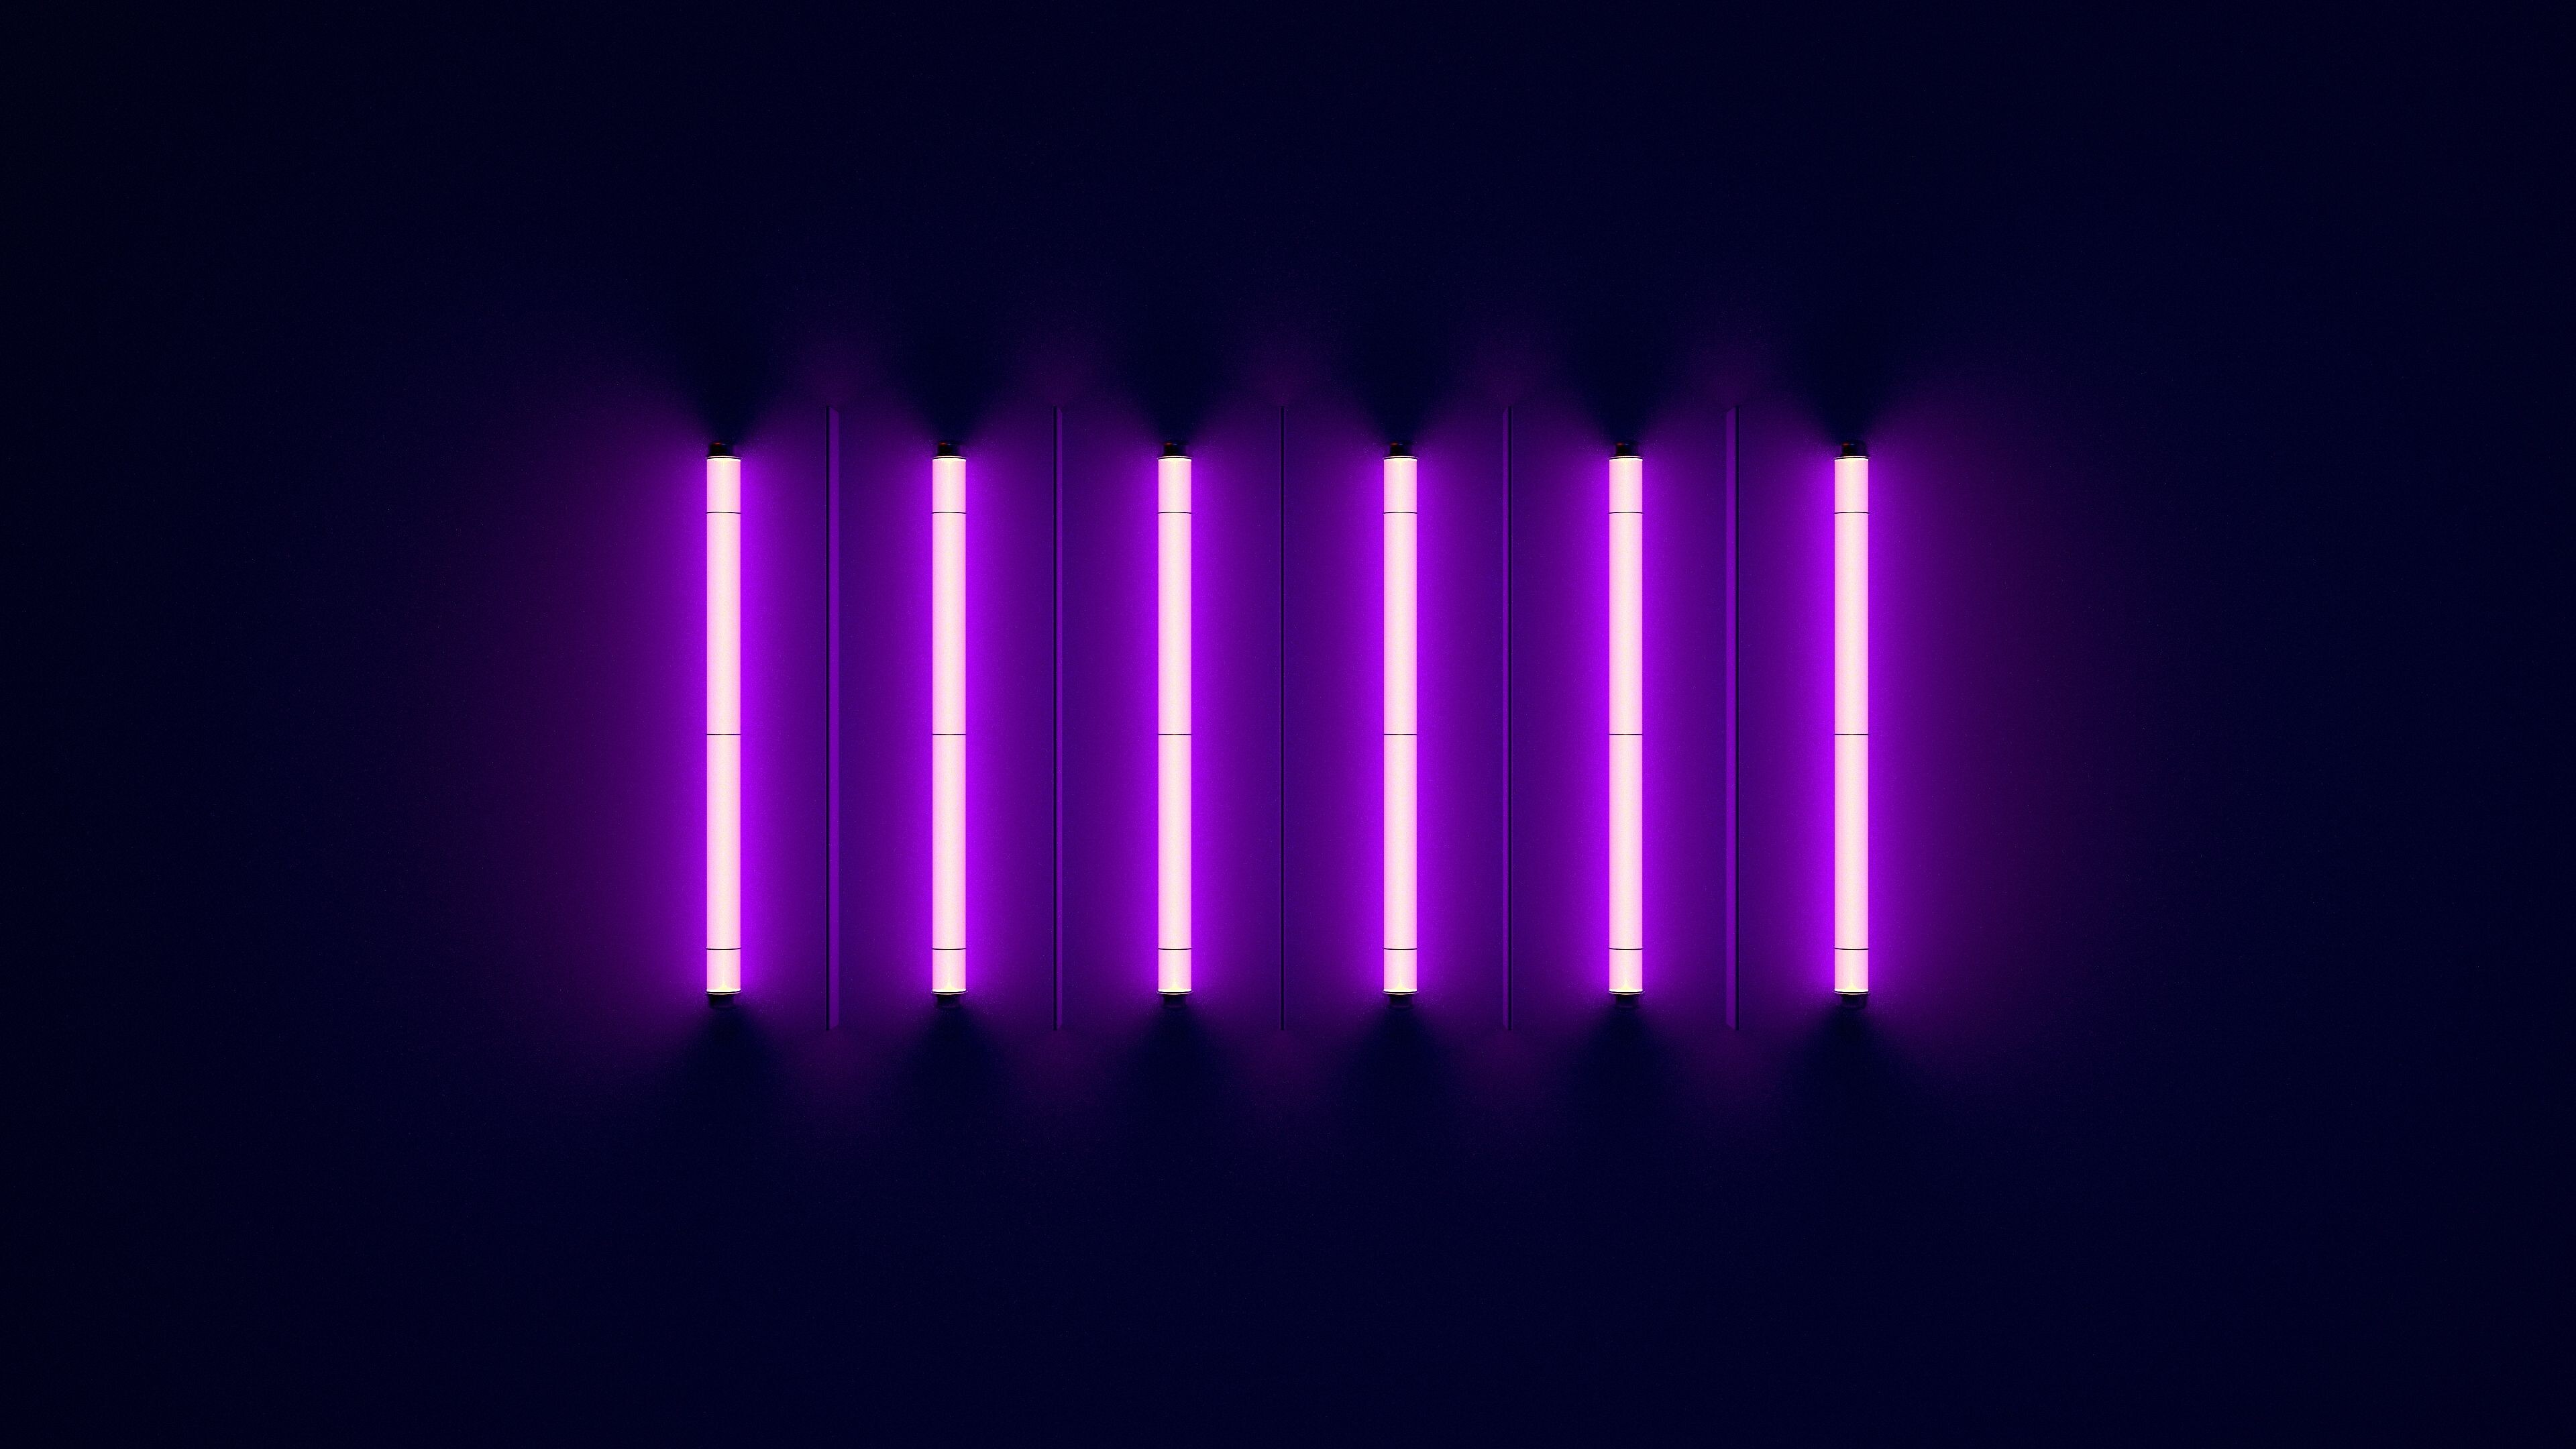 Glow in the Dark: Fluorescent lights, Neon rectangle pattern, Visual effects. 3840x2160 4K Wallpaper.